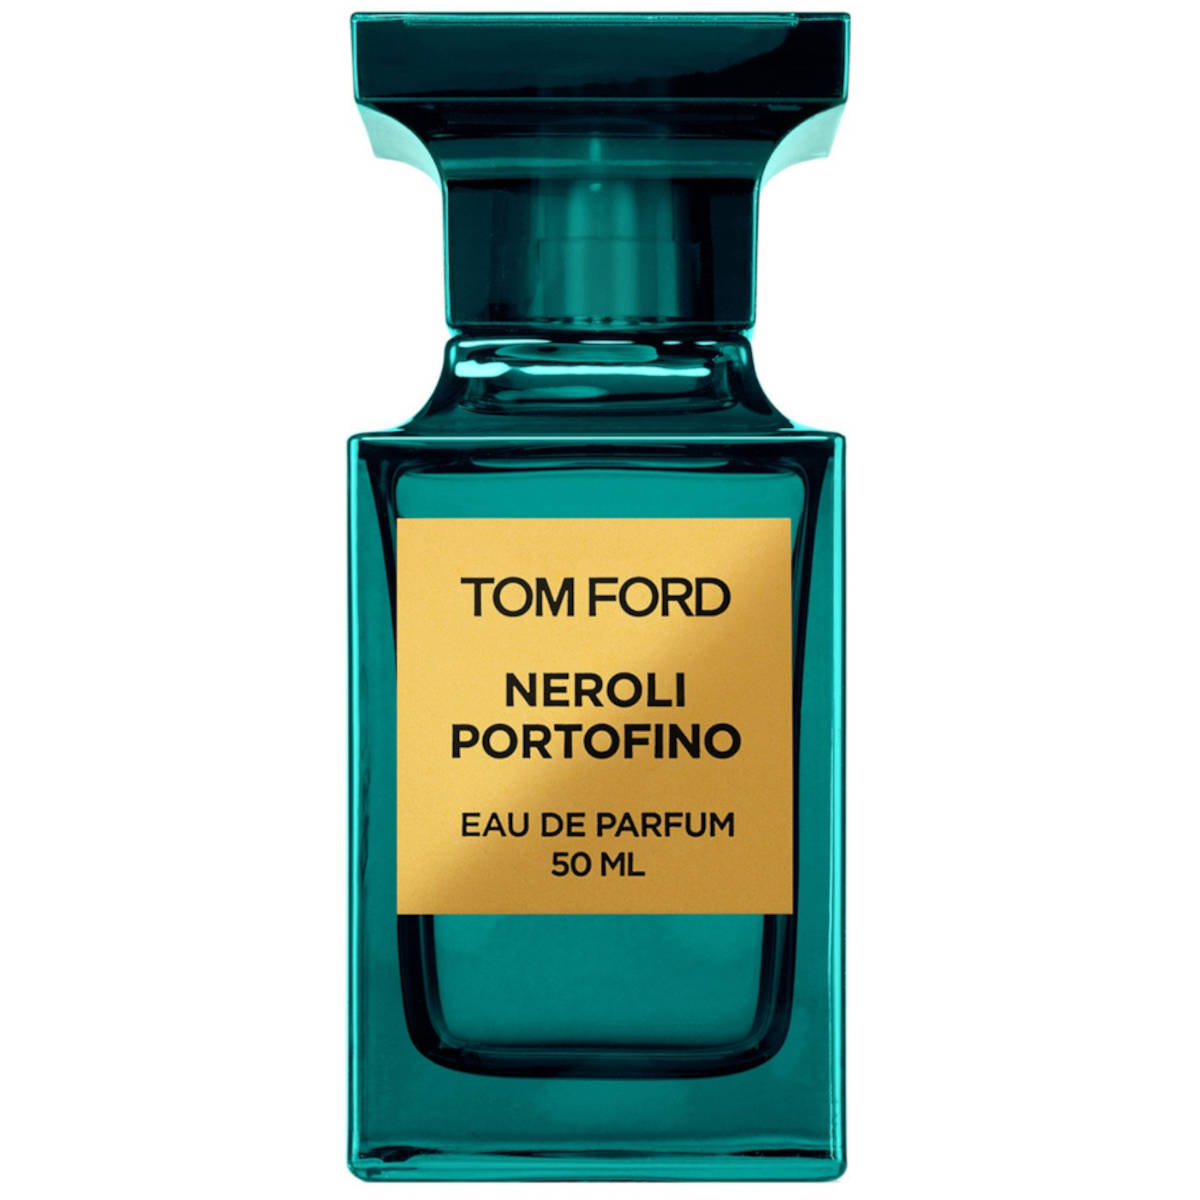 Tom Ford profumo agrumato Neroli Portofino